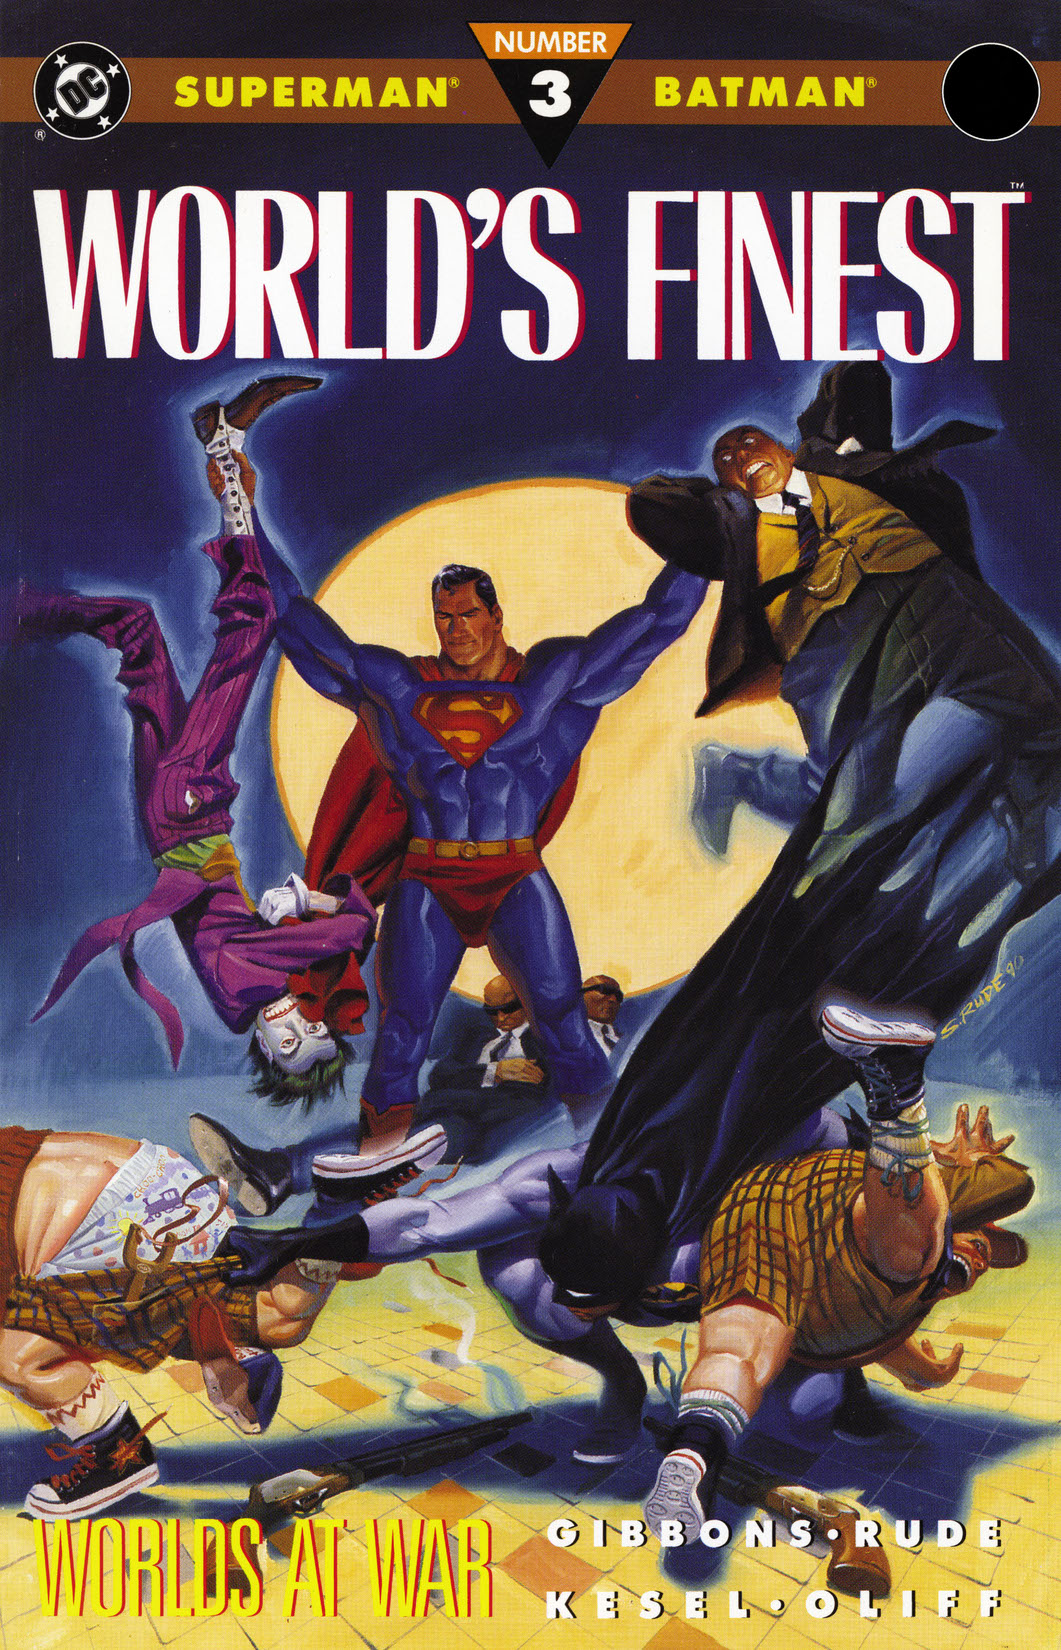 of 3 World's Finest # 1 USA,1990 Suoerman/Batman 